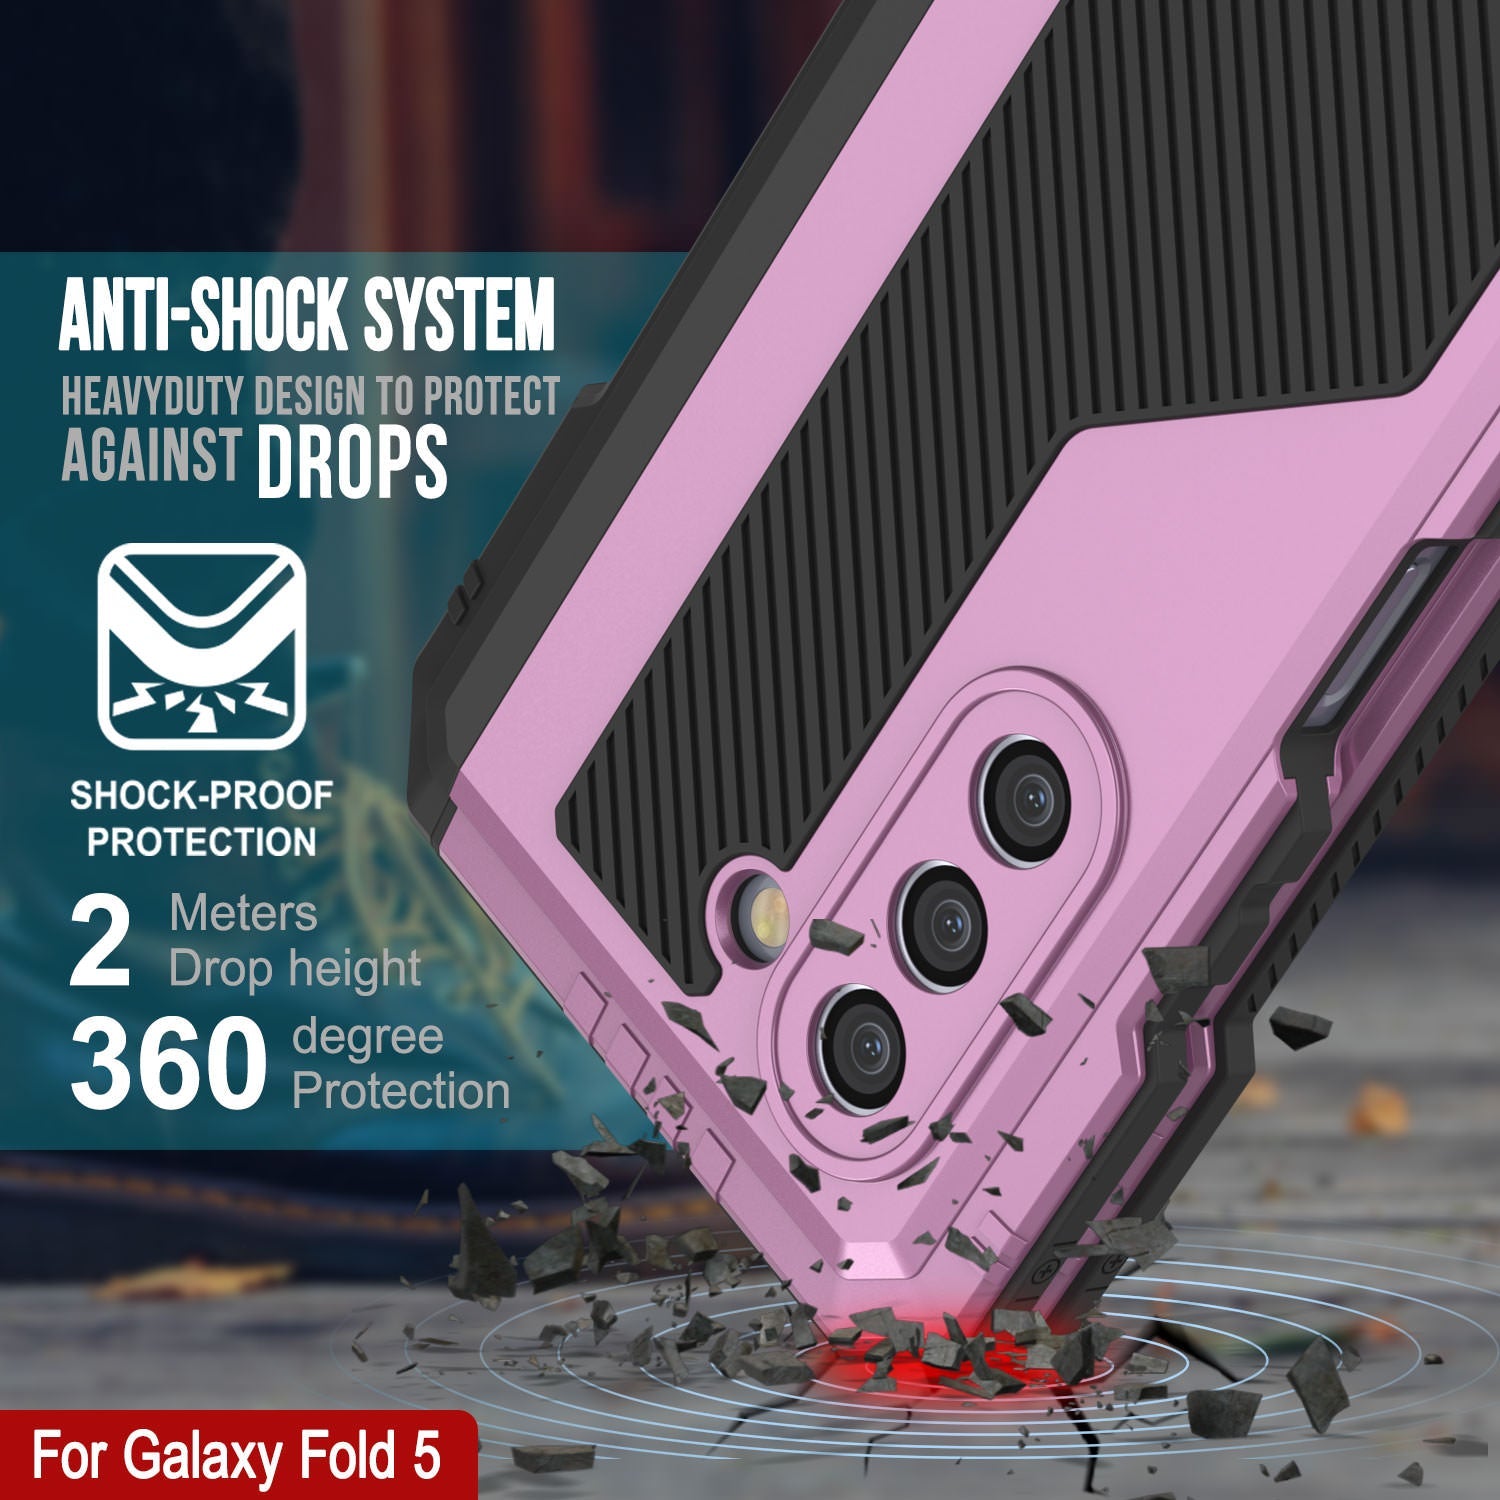 Galaxy Z Fold5 Metal Case, Heavy Duty Military Grade Armor Cover Full Body Hard [Pink]